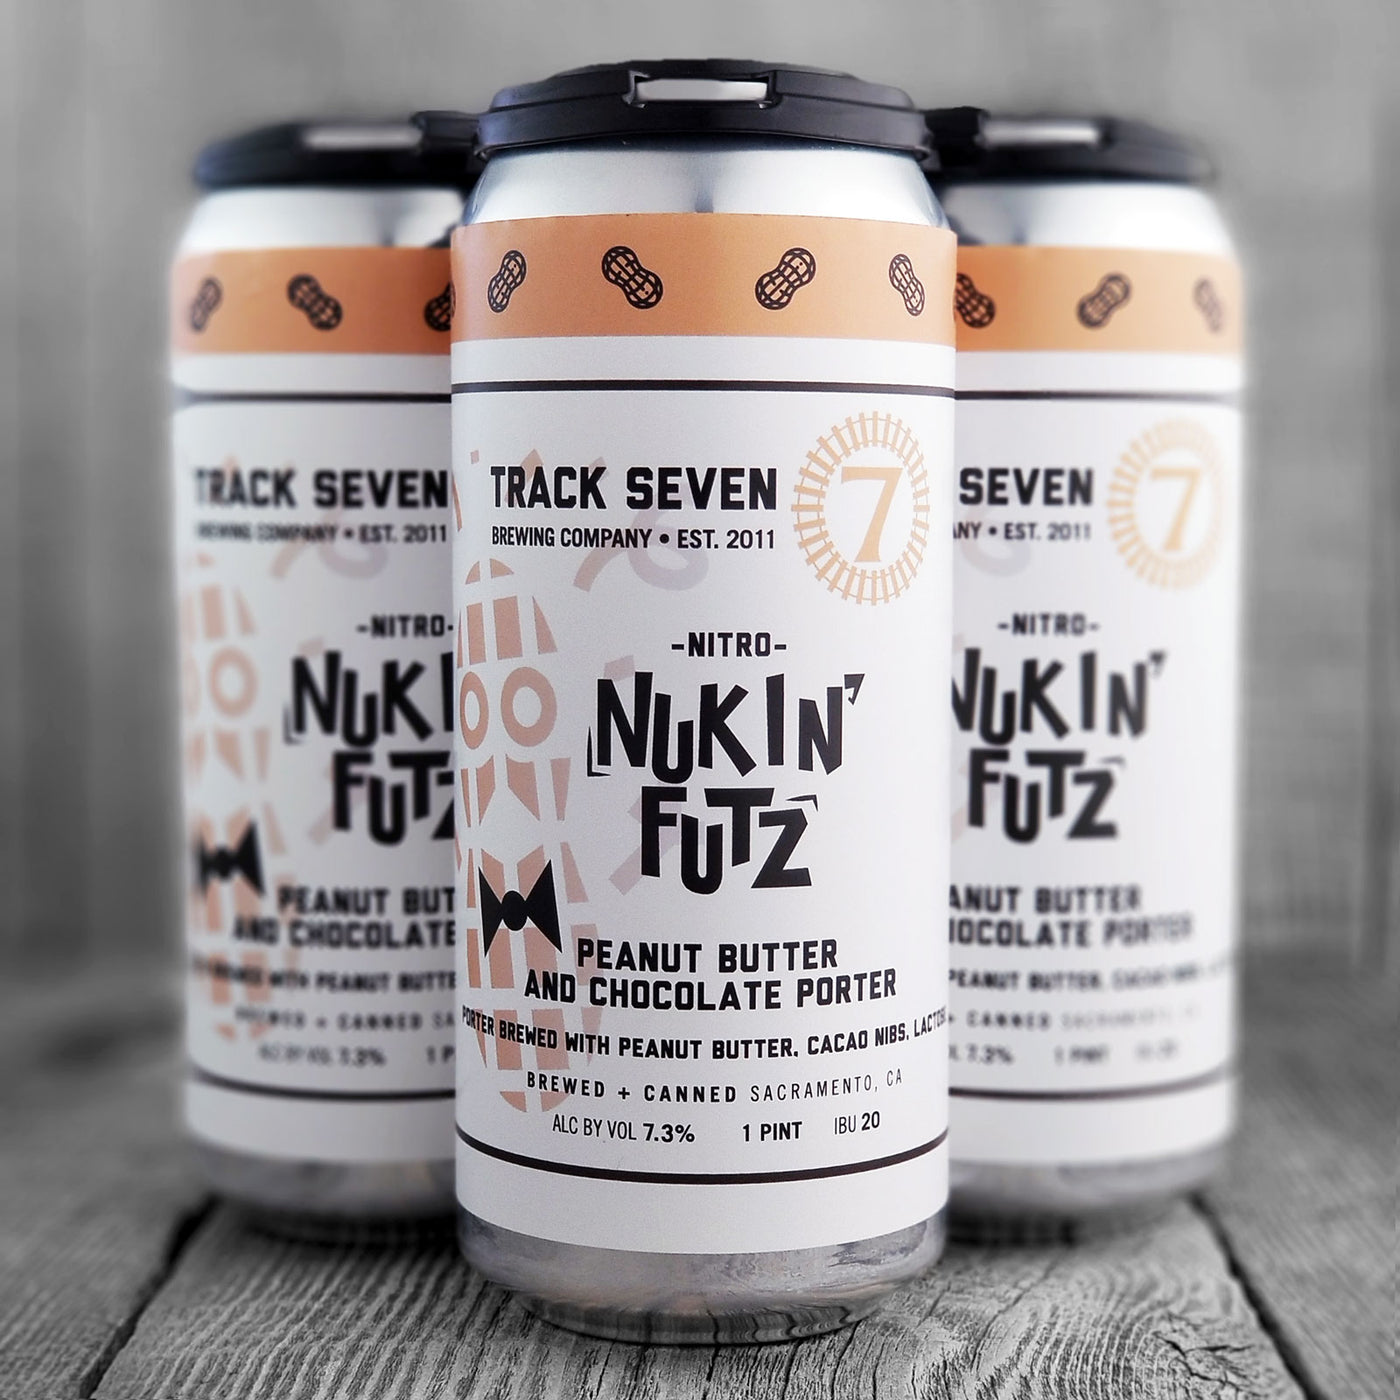 Track Seven Nitro Nukin’ Futz